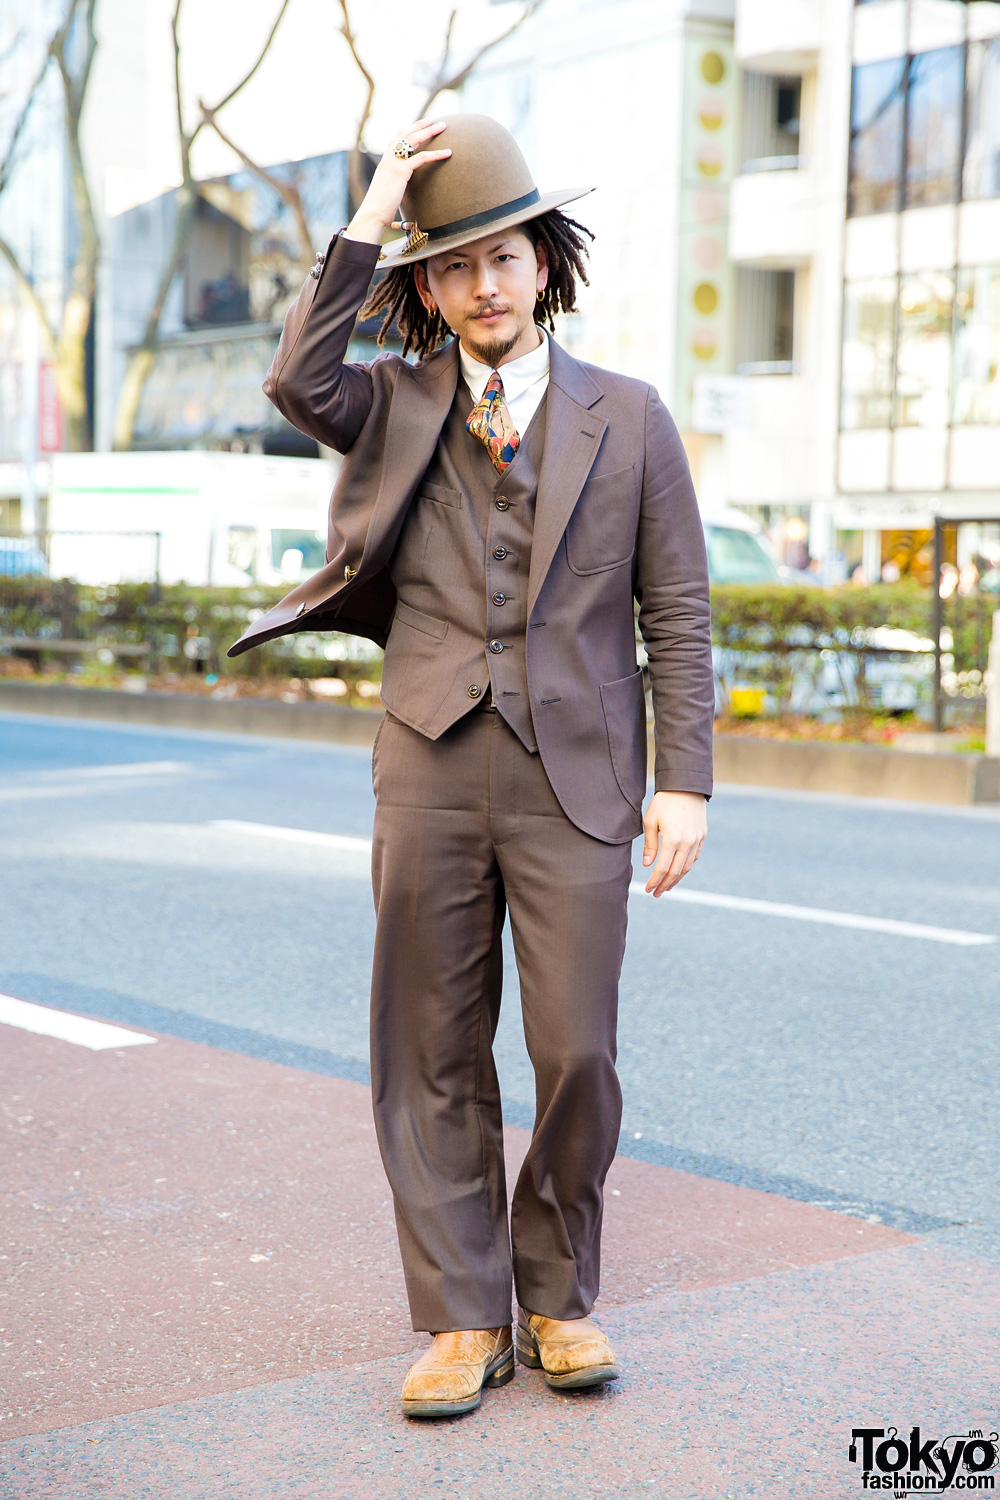 Japanese Creative Artist in Dapper Street Fashion w/ The Stylist Japan Suit, Bowler Hat & Dreadlocks